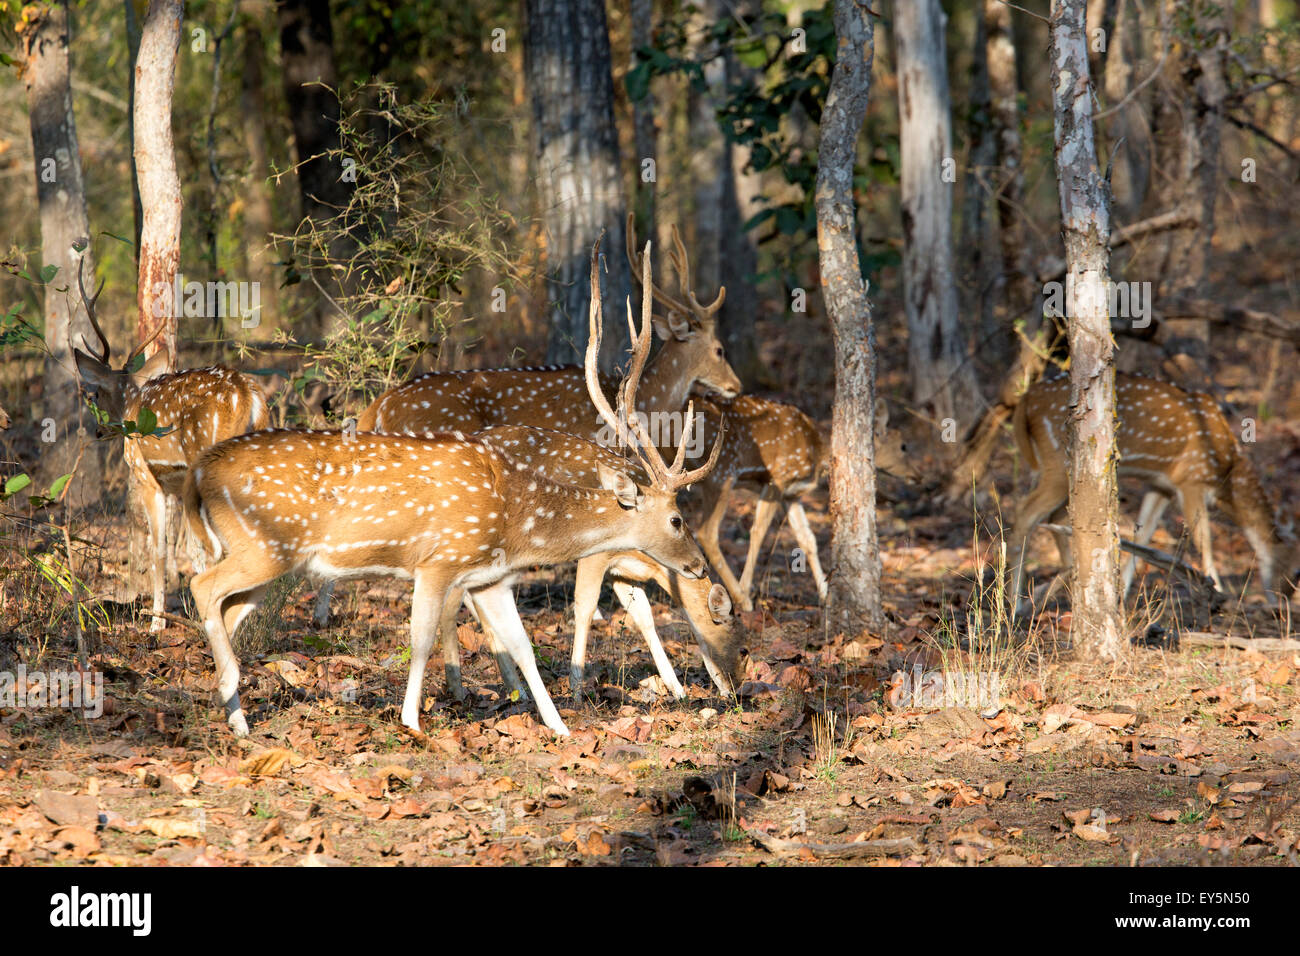 Axis deer in the undergrowth - Bandhavgarh NP India Stock Photo